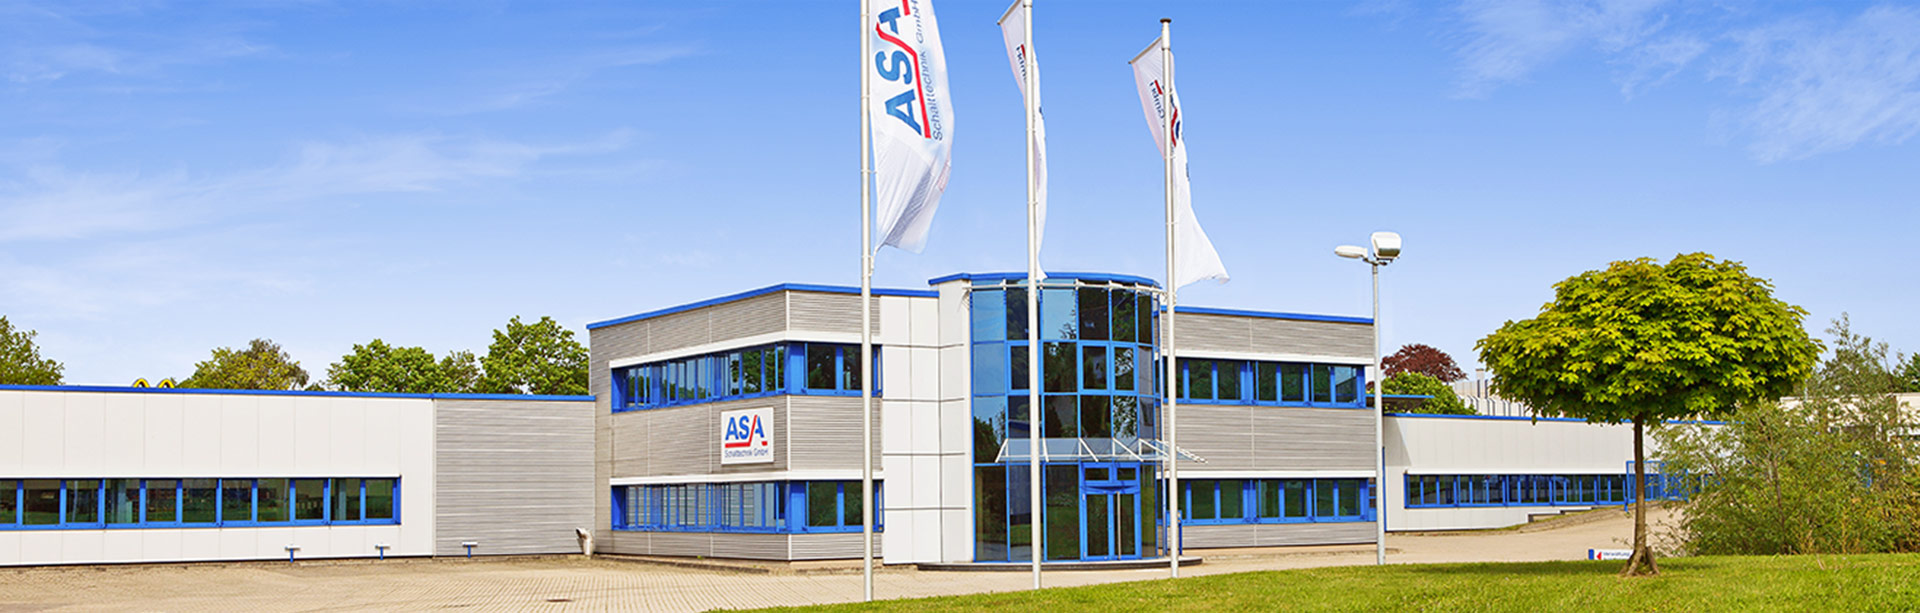 Company building ASA Schalttechnik